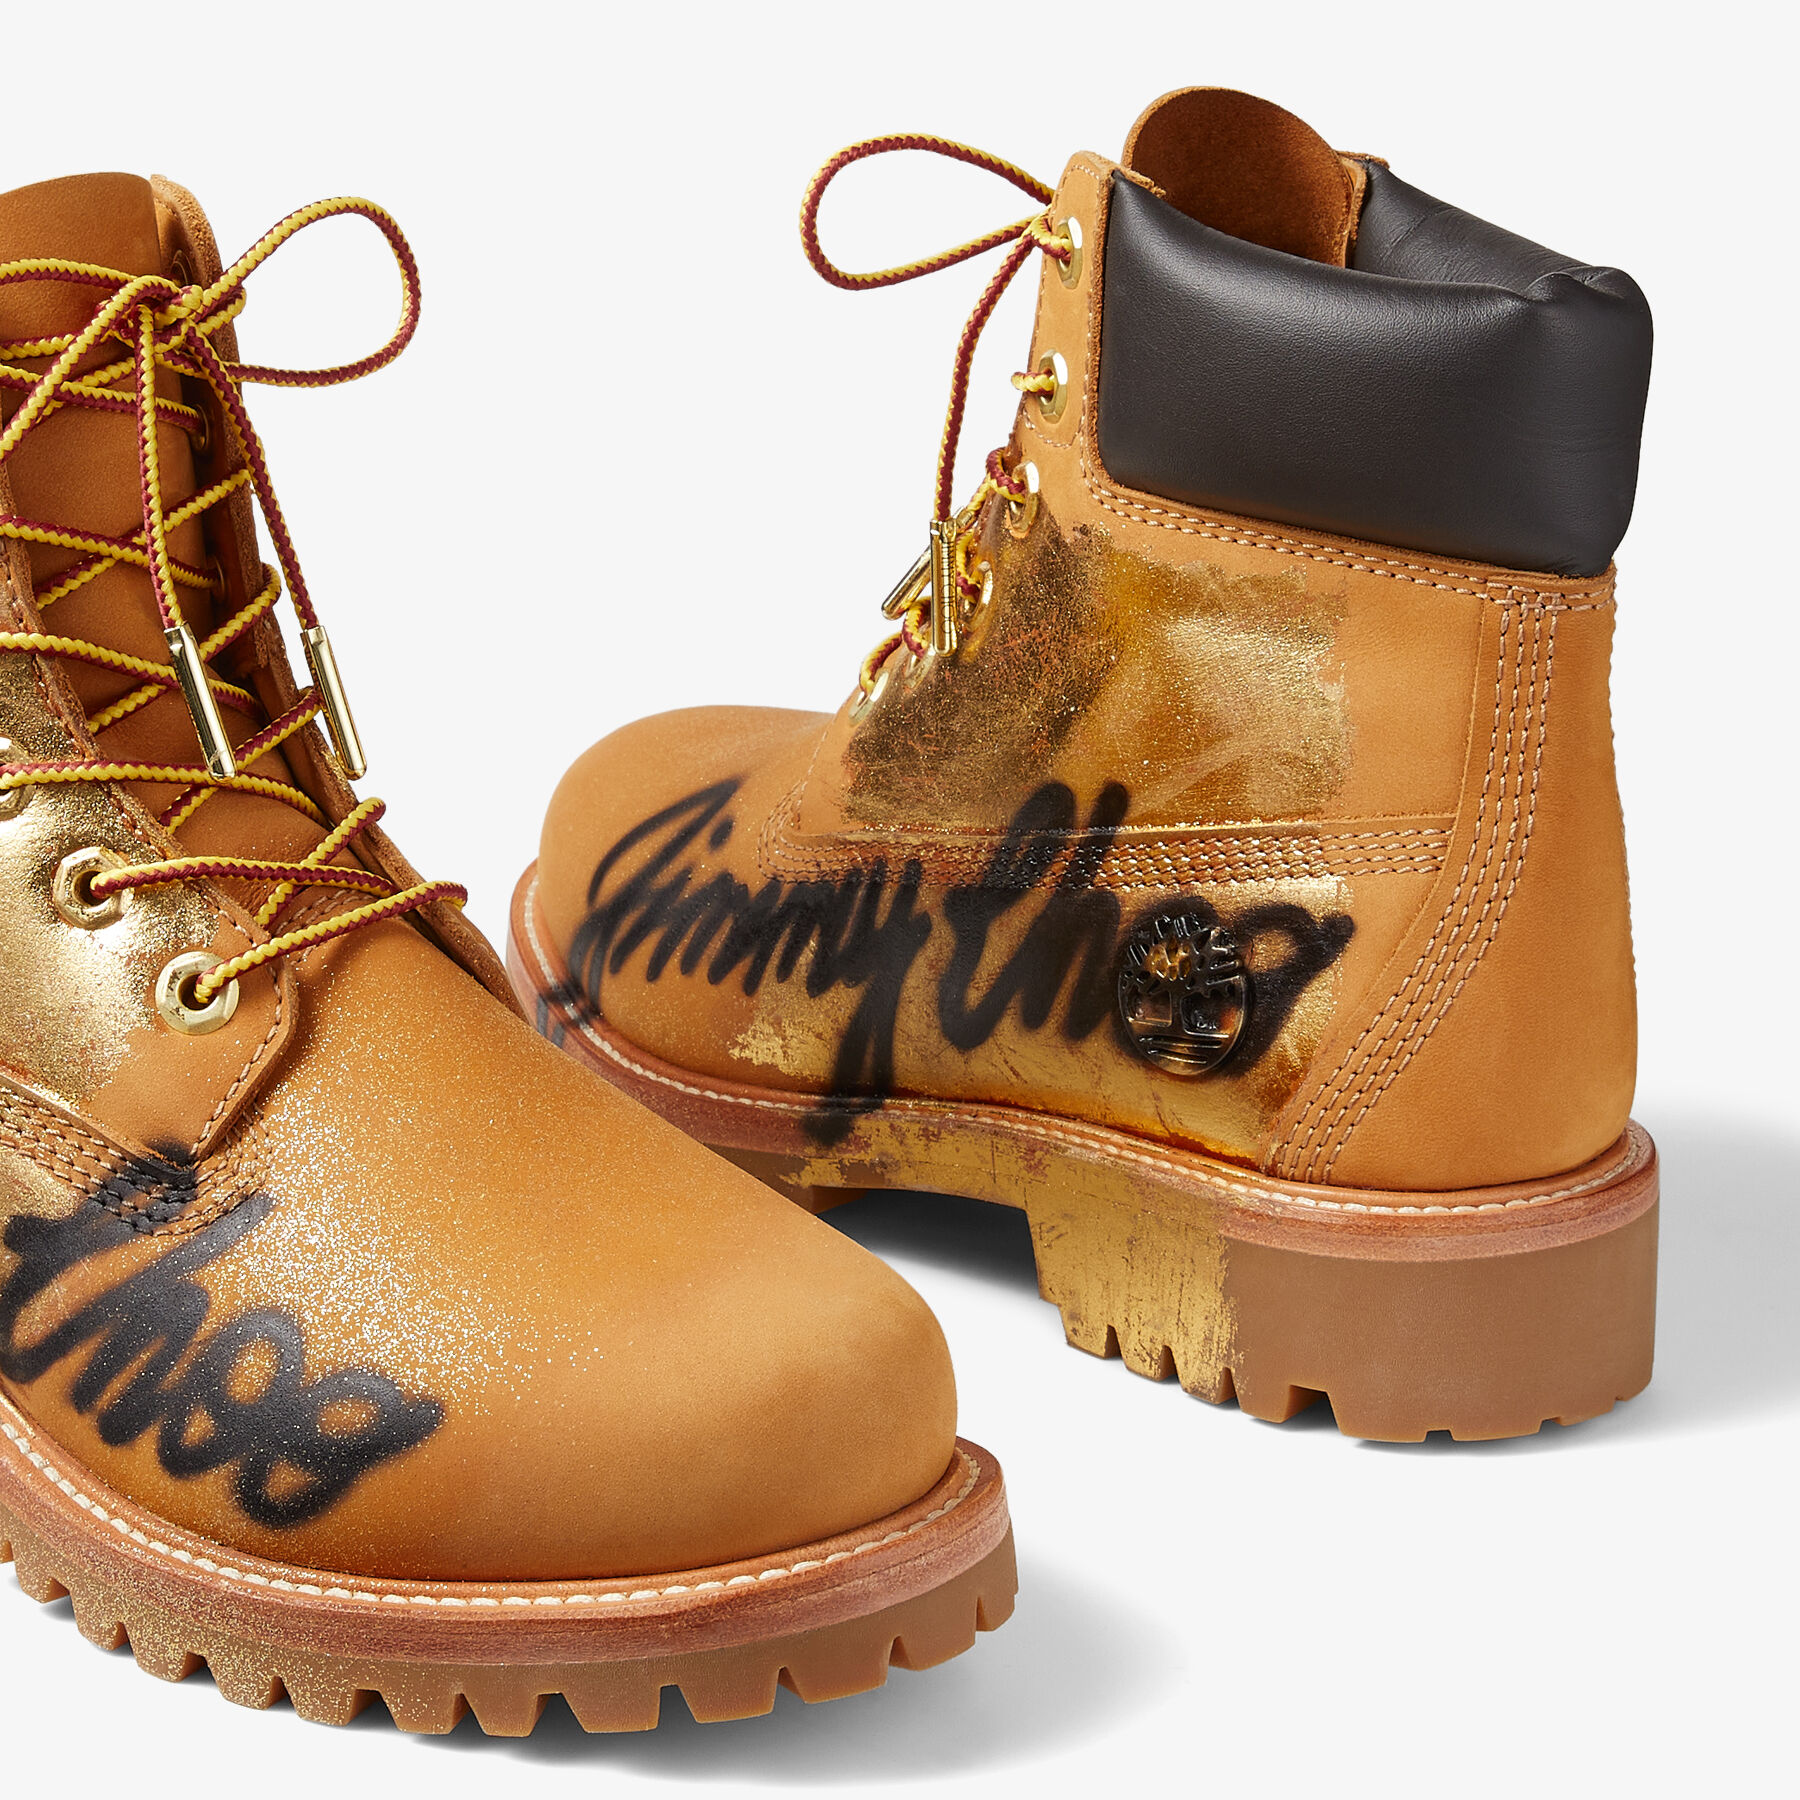 Wheat Timberland Nubuck Boots with Jimmy Choo Graffiti | JIMMY CHOO TIMBERLAND 6 GRAFFITI BOOT Jimmy Choo x Timberland Collection | JIMMY CHOO